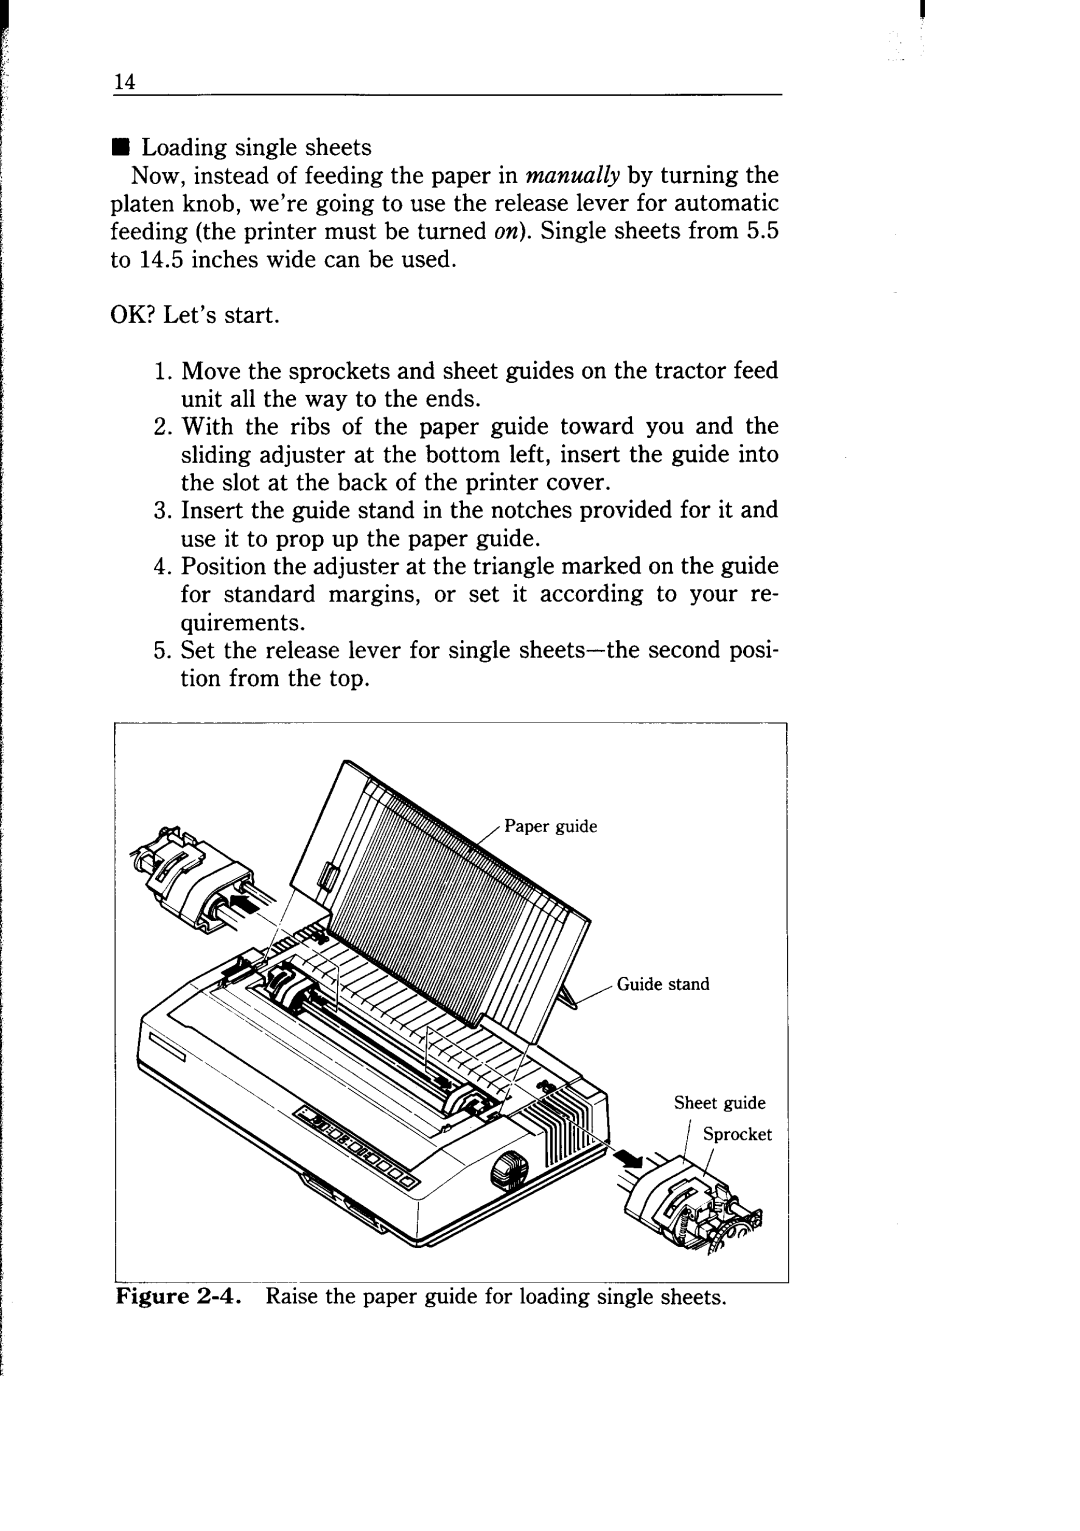 Star Micronics NB-15 user manual n Loading single sheets 